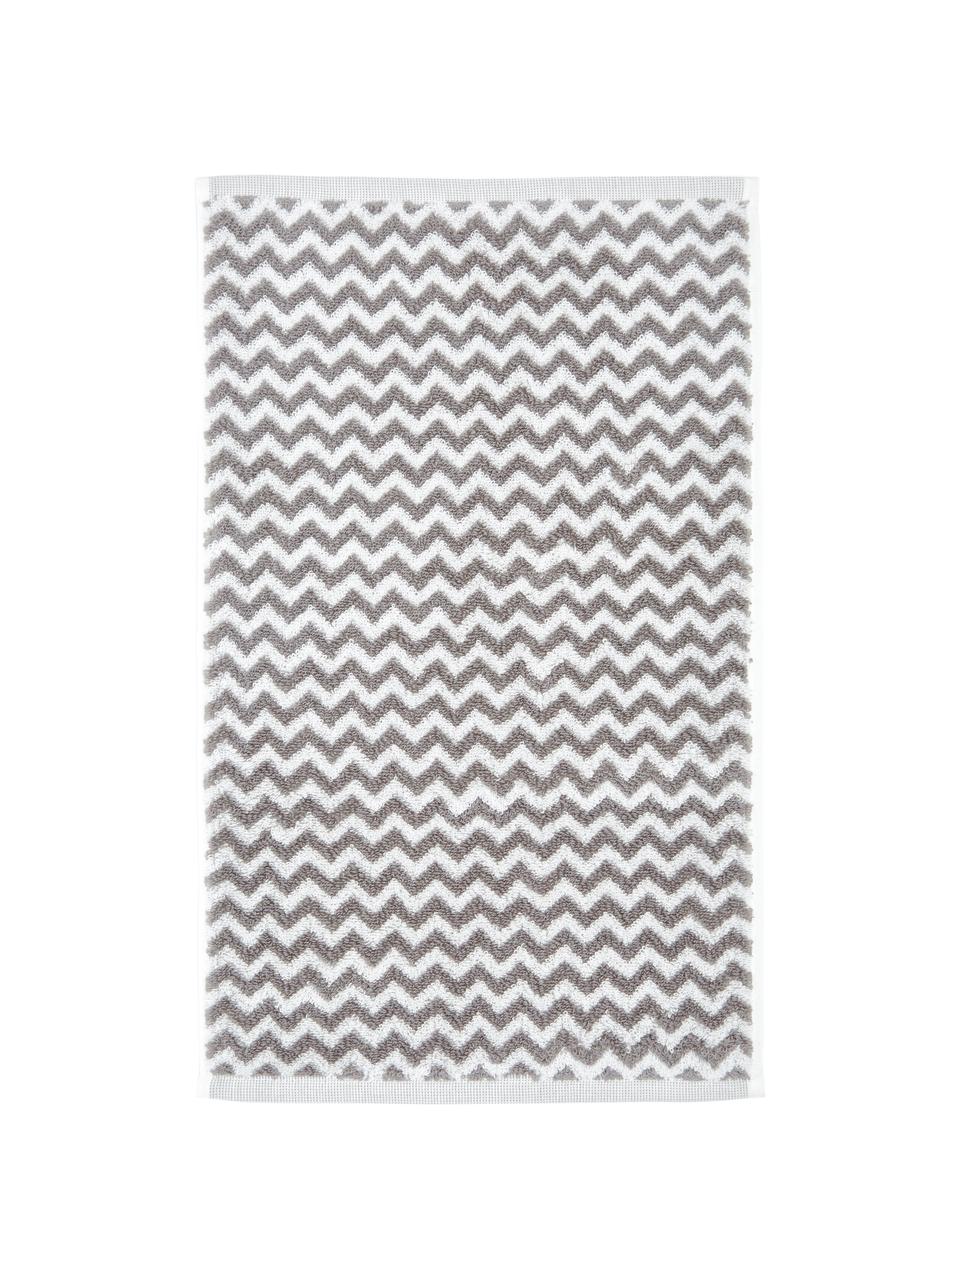 Handdoek Liv met zigzag patroon, 2 stuks, 100% katoen, middelzware kwaliteit, 550 g/m², Taupe, wit, Gastendoekje, B 30 x L 50 cm, 2 stuks